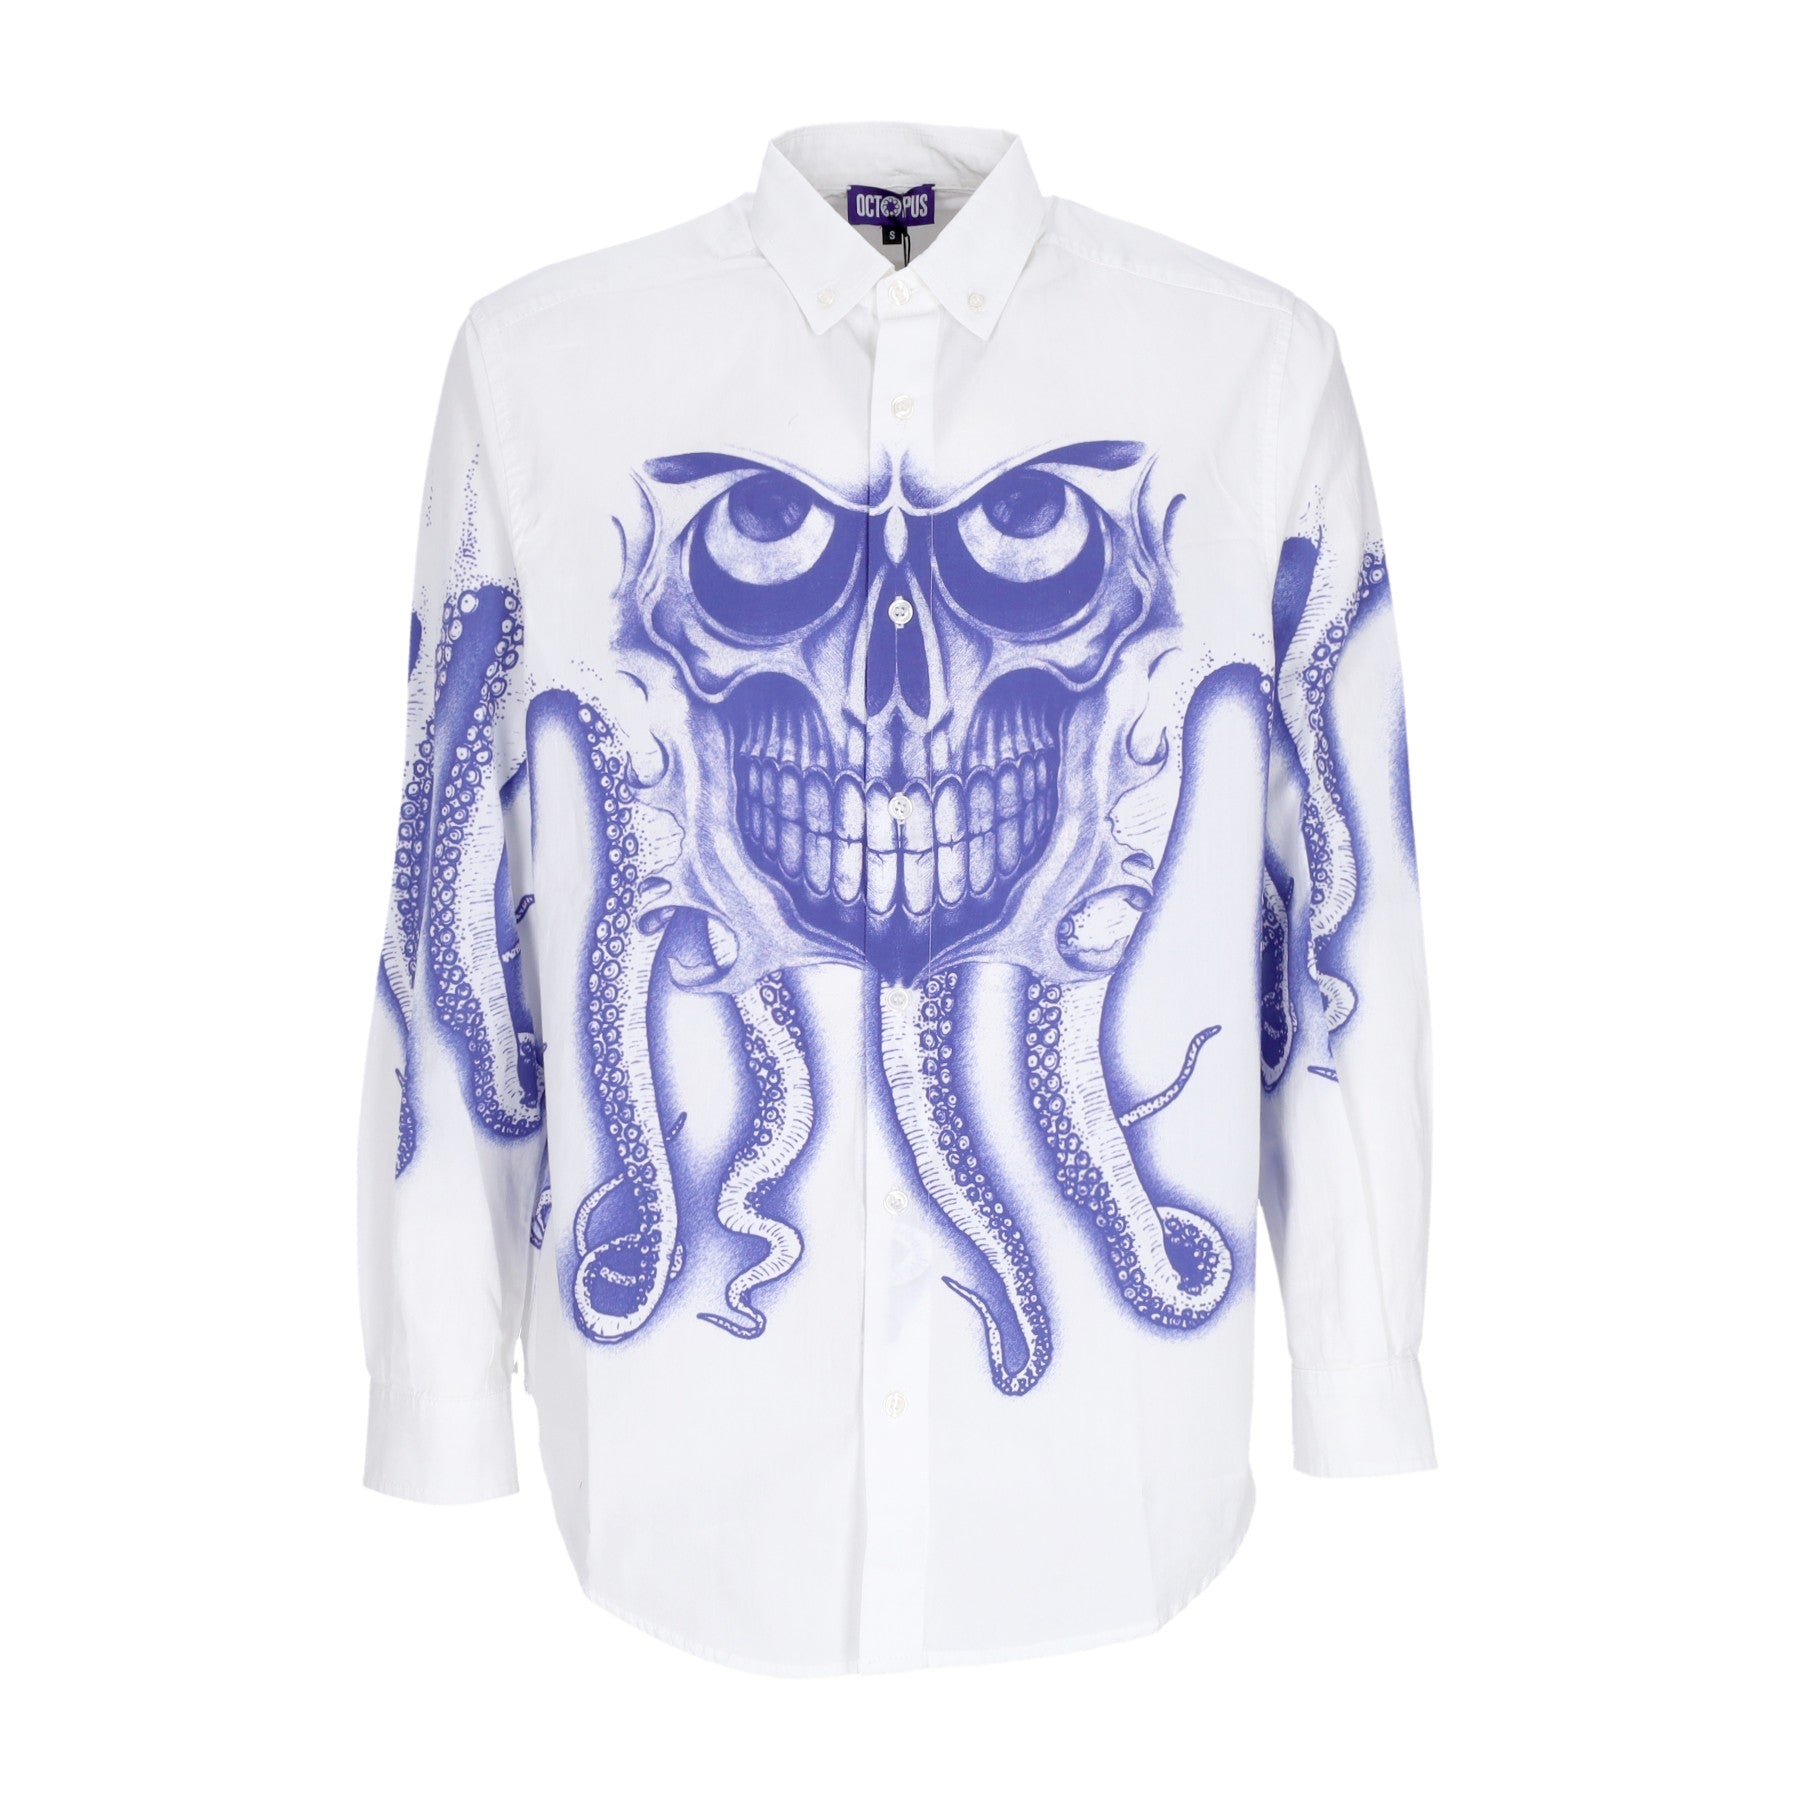 Octopus, Camicia Manica Lunga Uomo Skull L/s Shirt, White